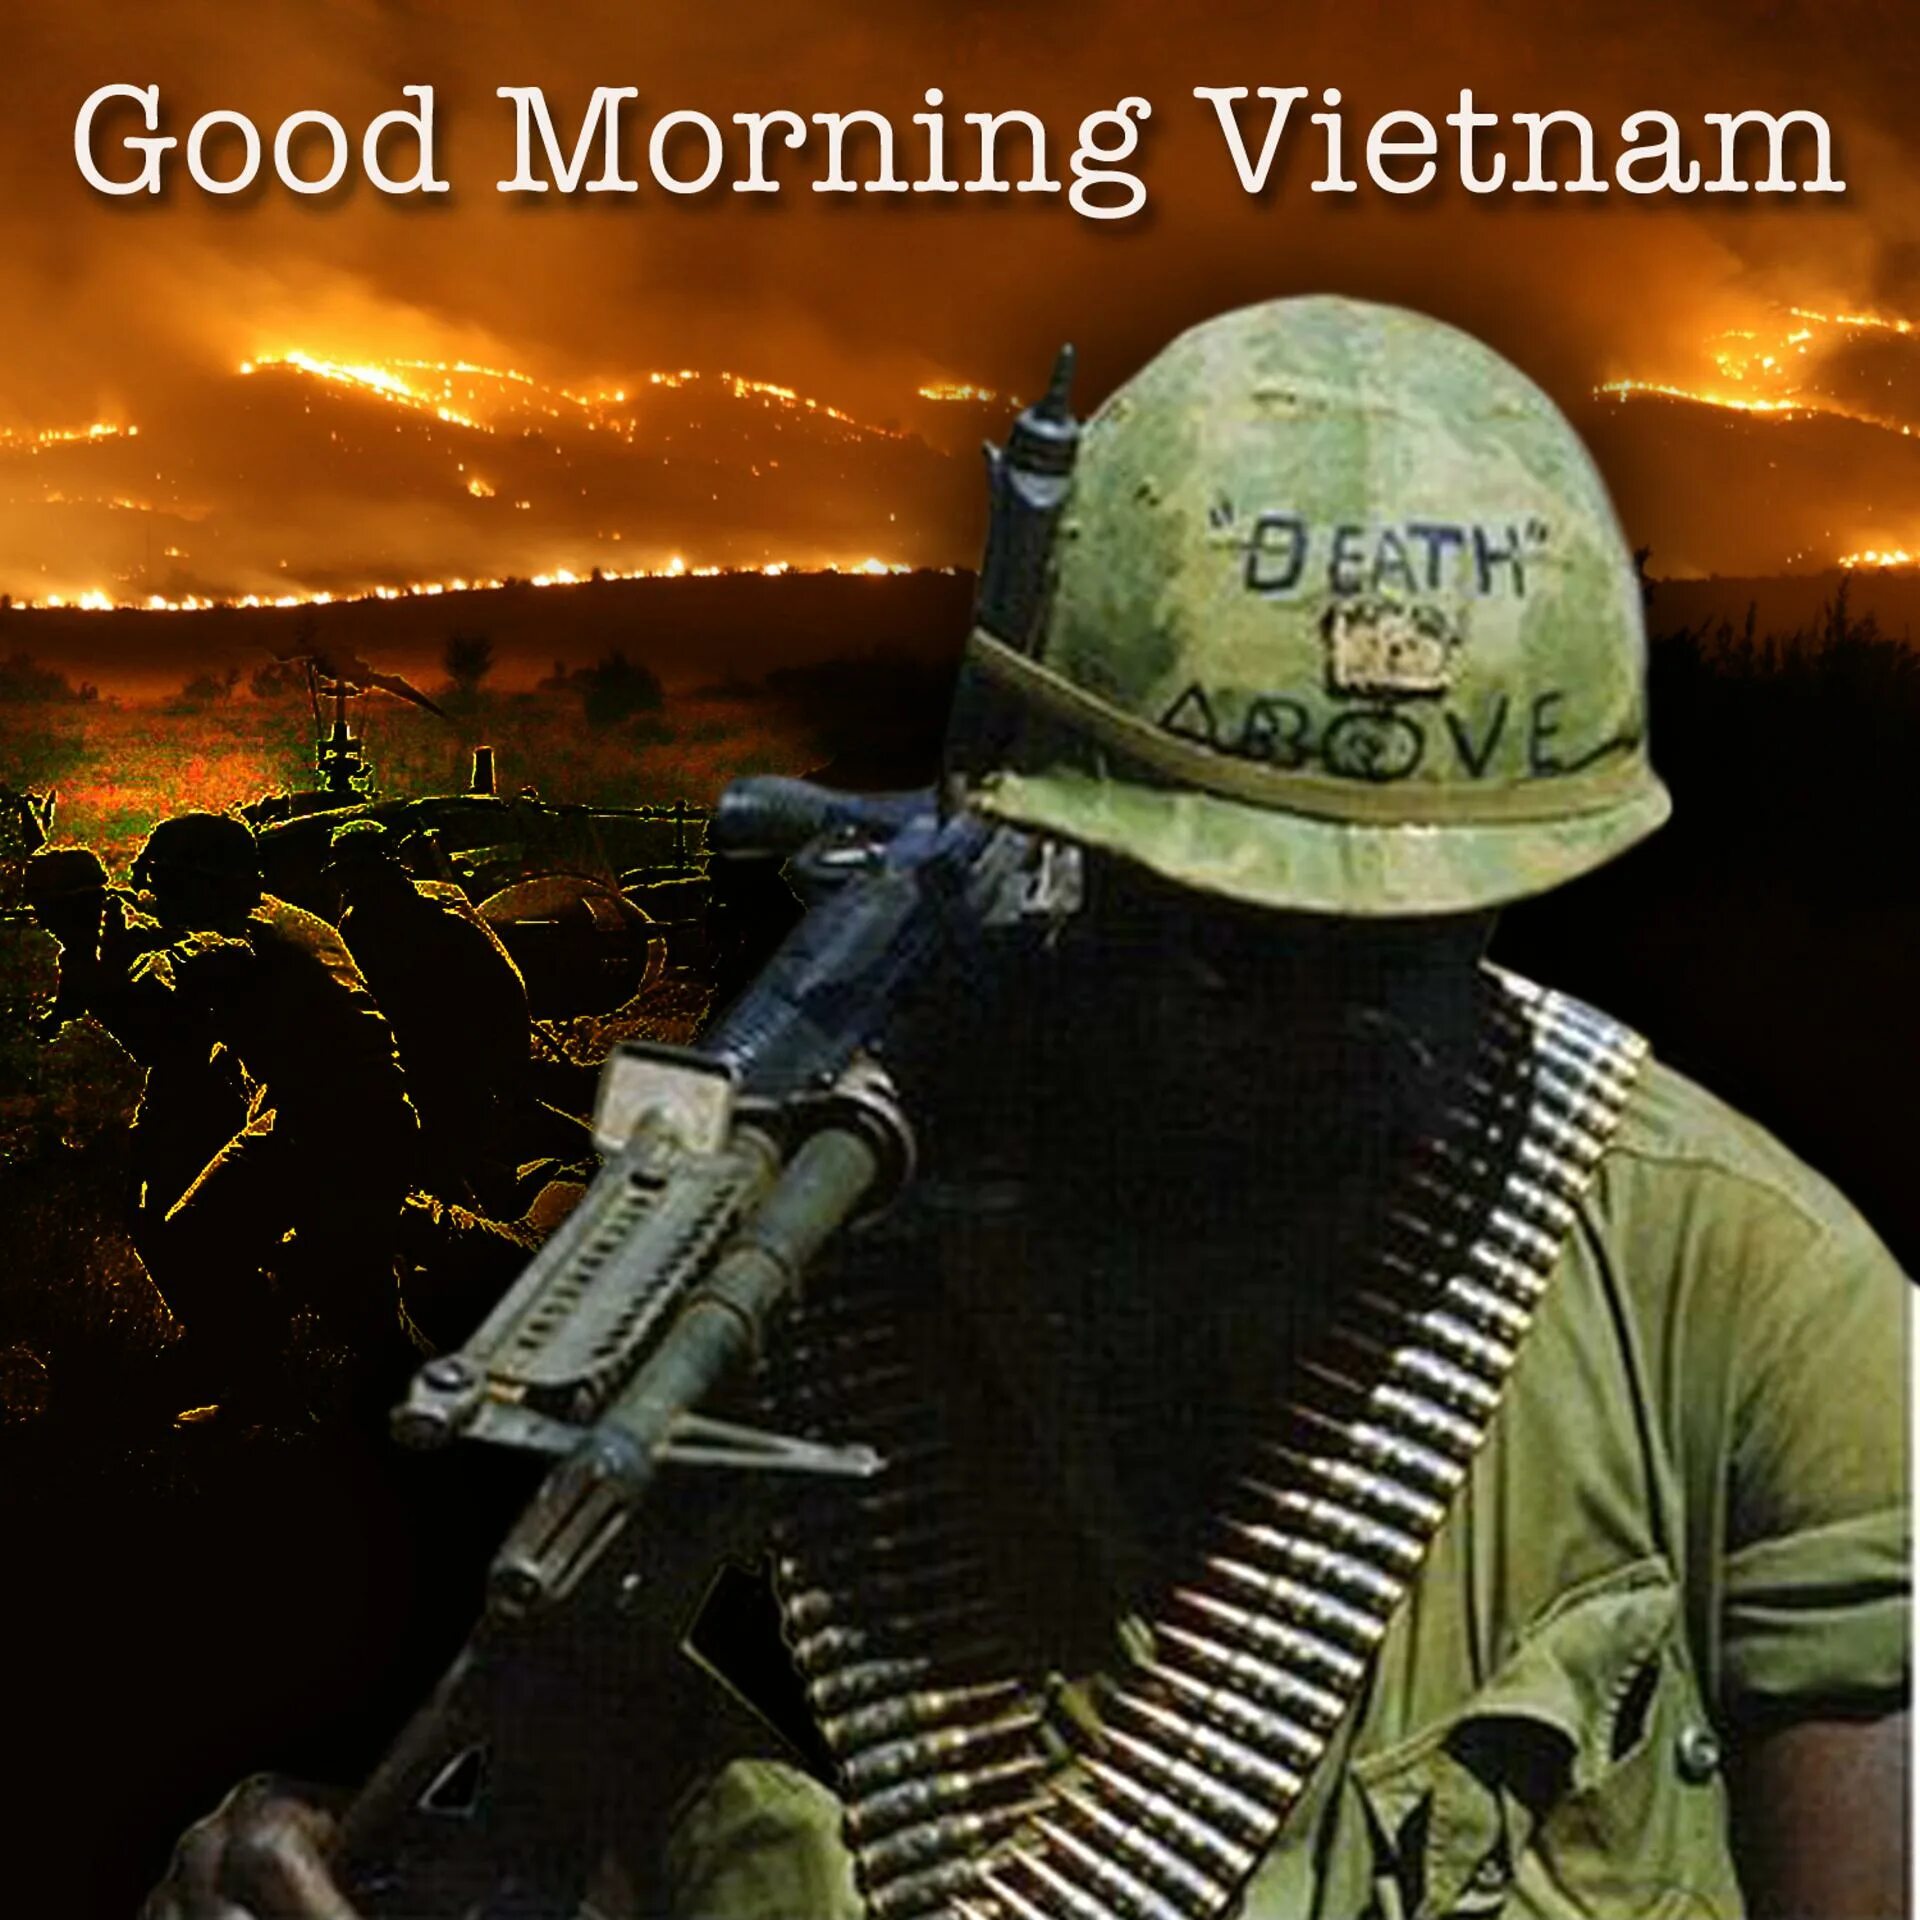 Good morning vietnam black. Гуууууууд морнинг Вьетнам. Гуд морнинг Вьетнам песня. Гуд Монинг Вьетнам Мем. Доброе утро Вьетнам.